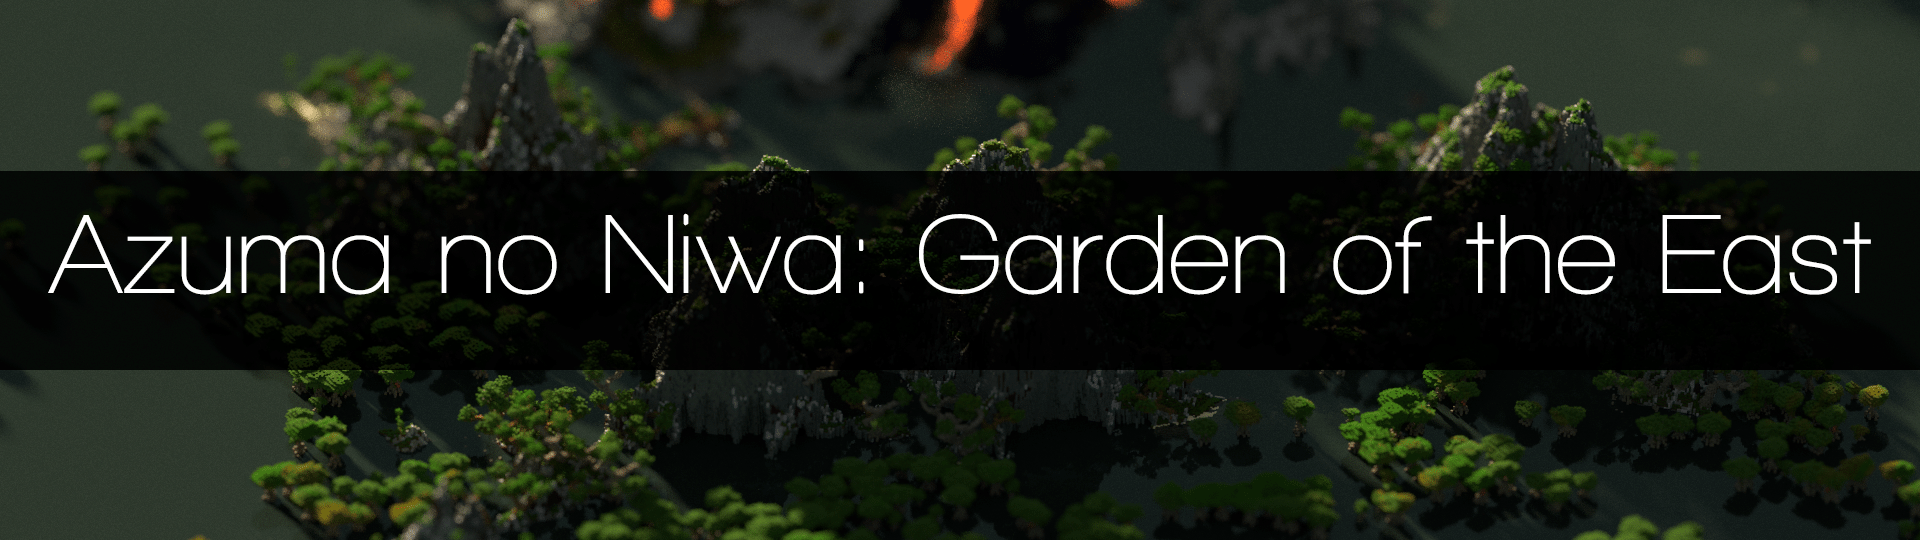 Azuma no Niwa: Garden of the East - KVb2R9Z